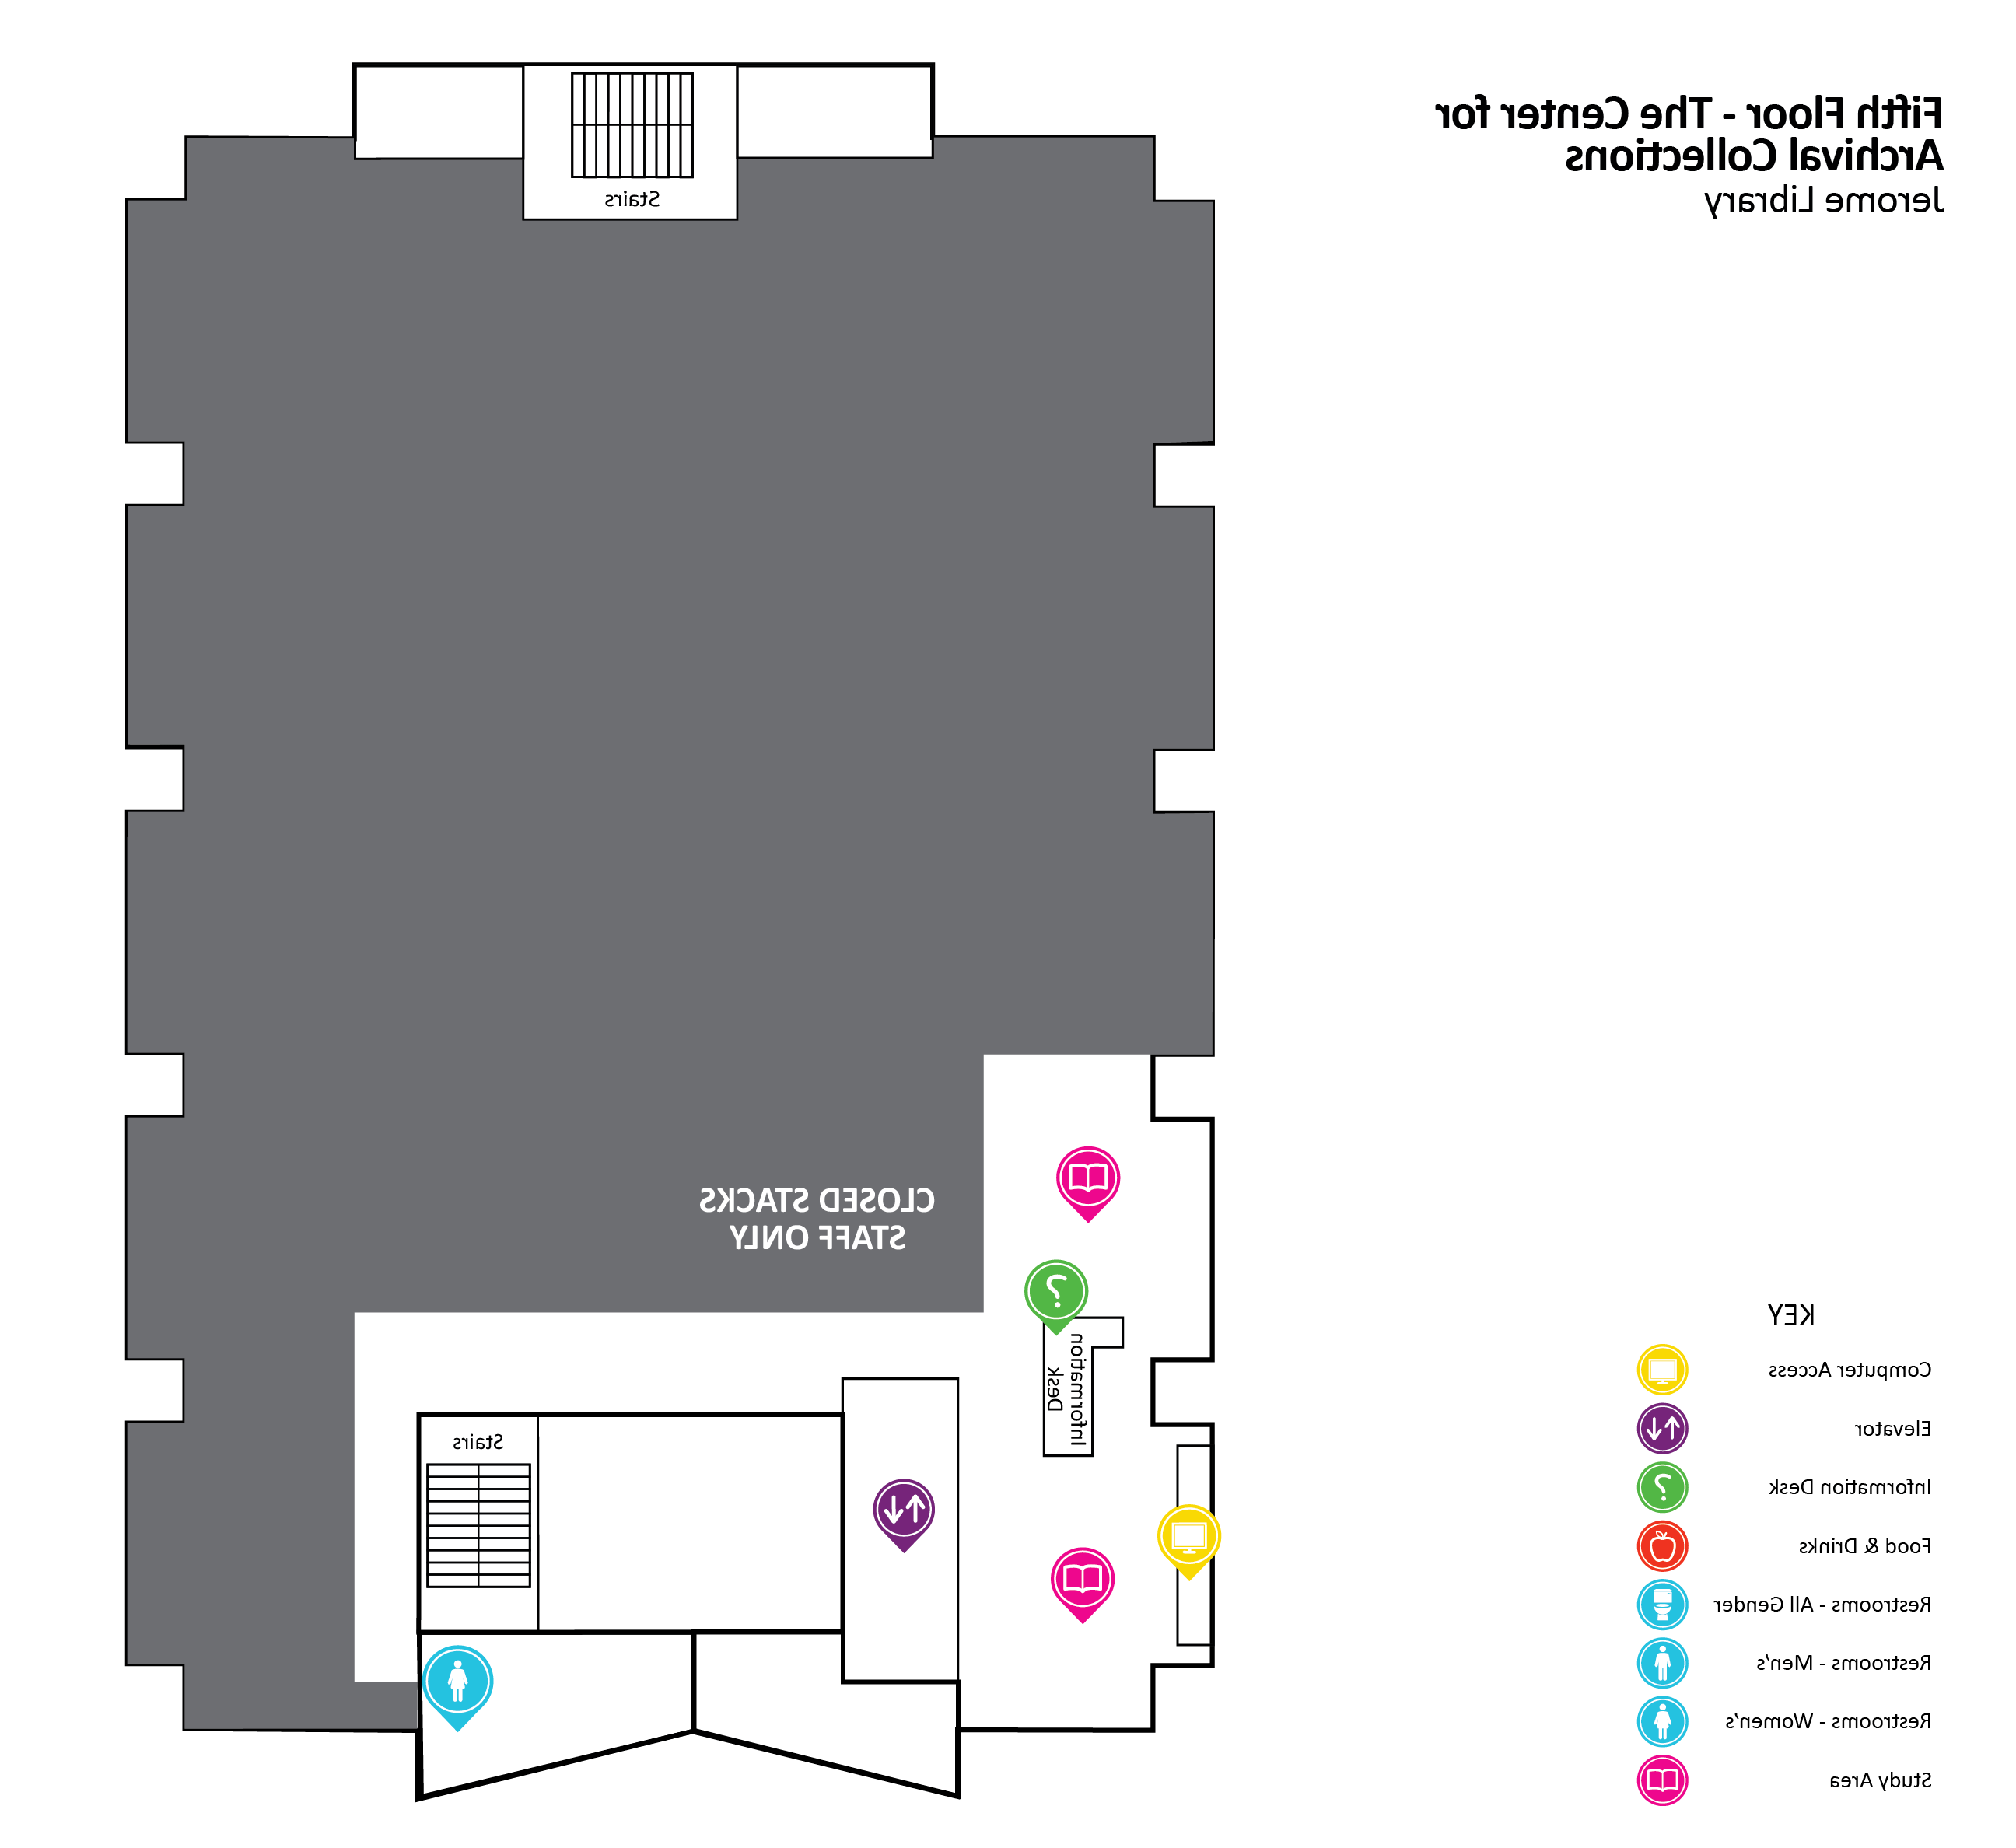 5th Floor Map